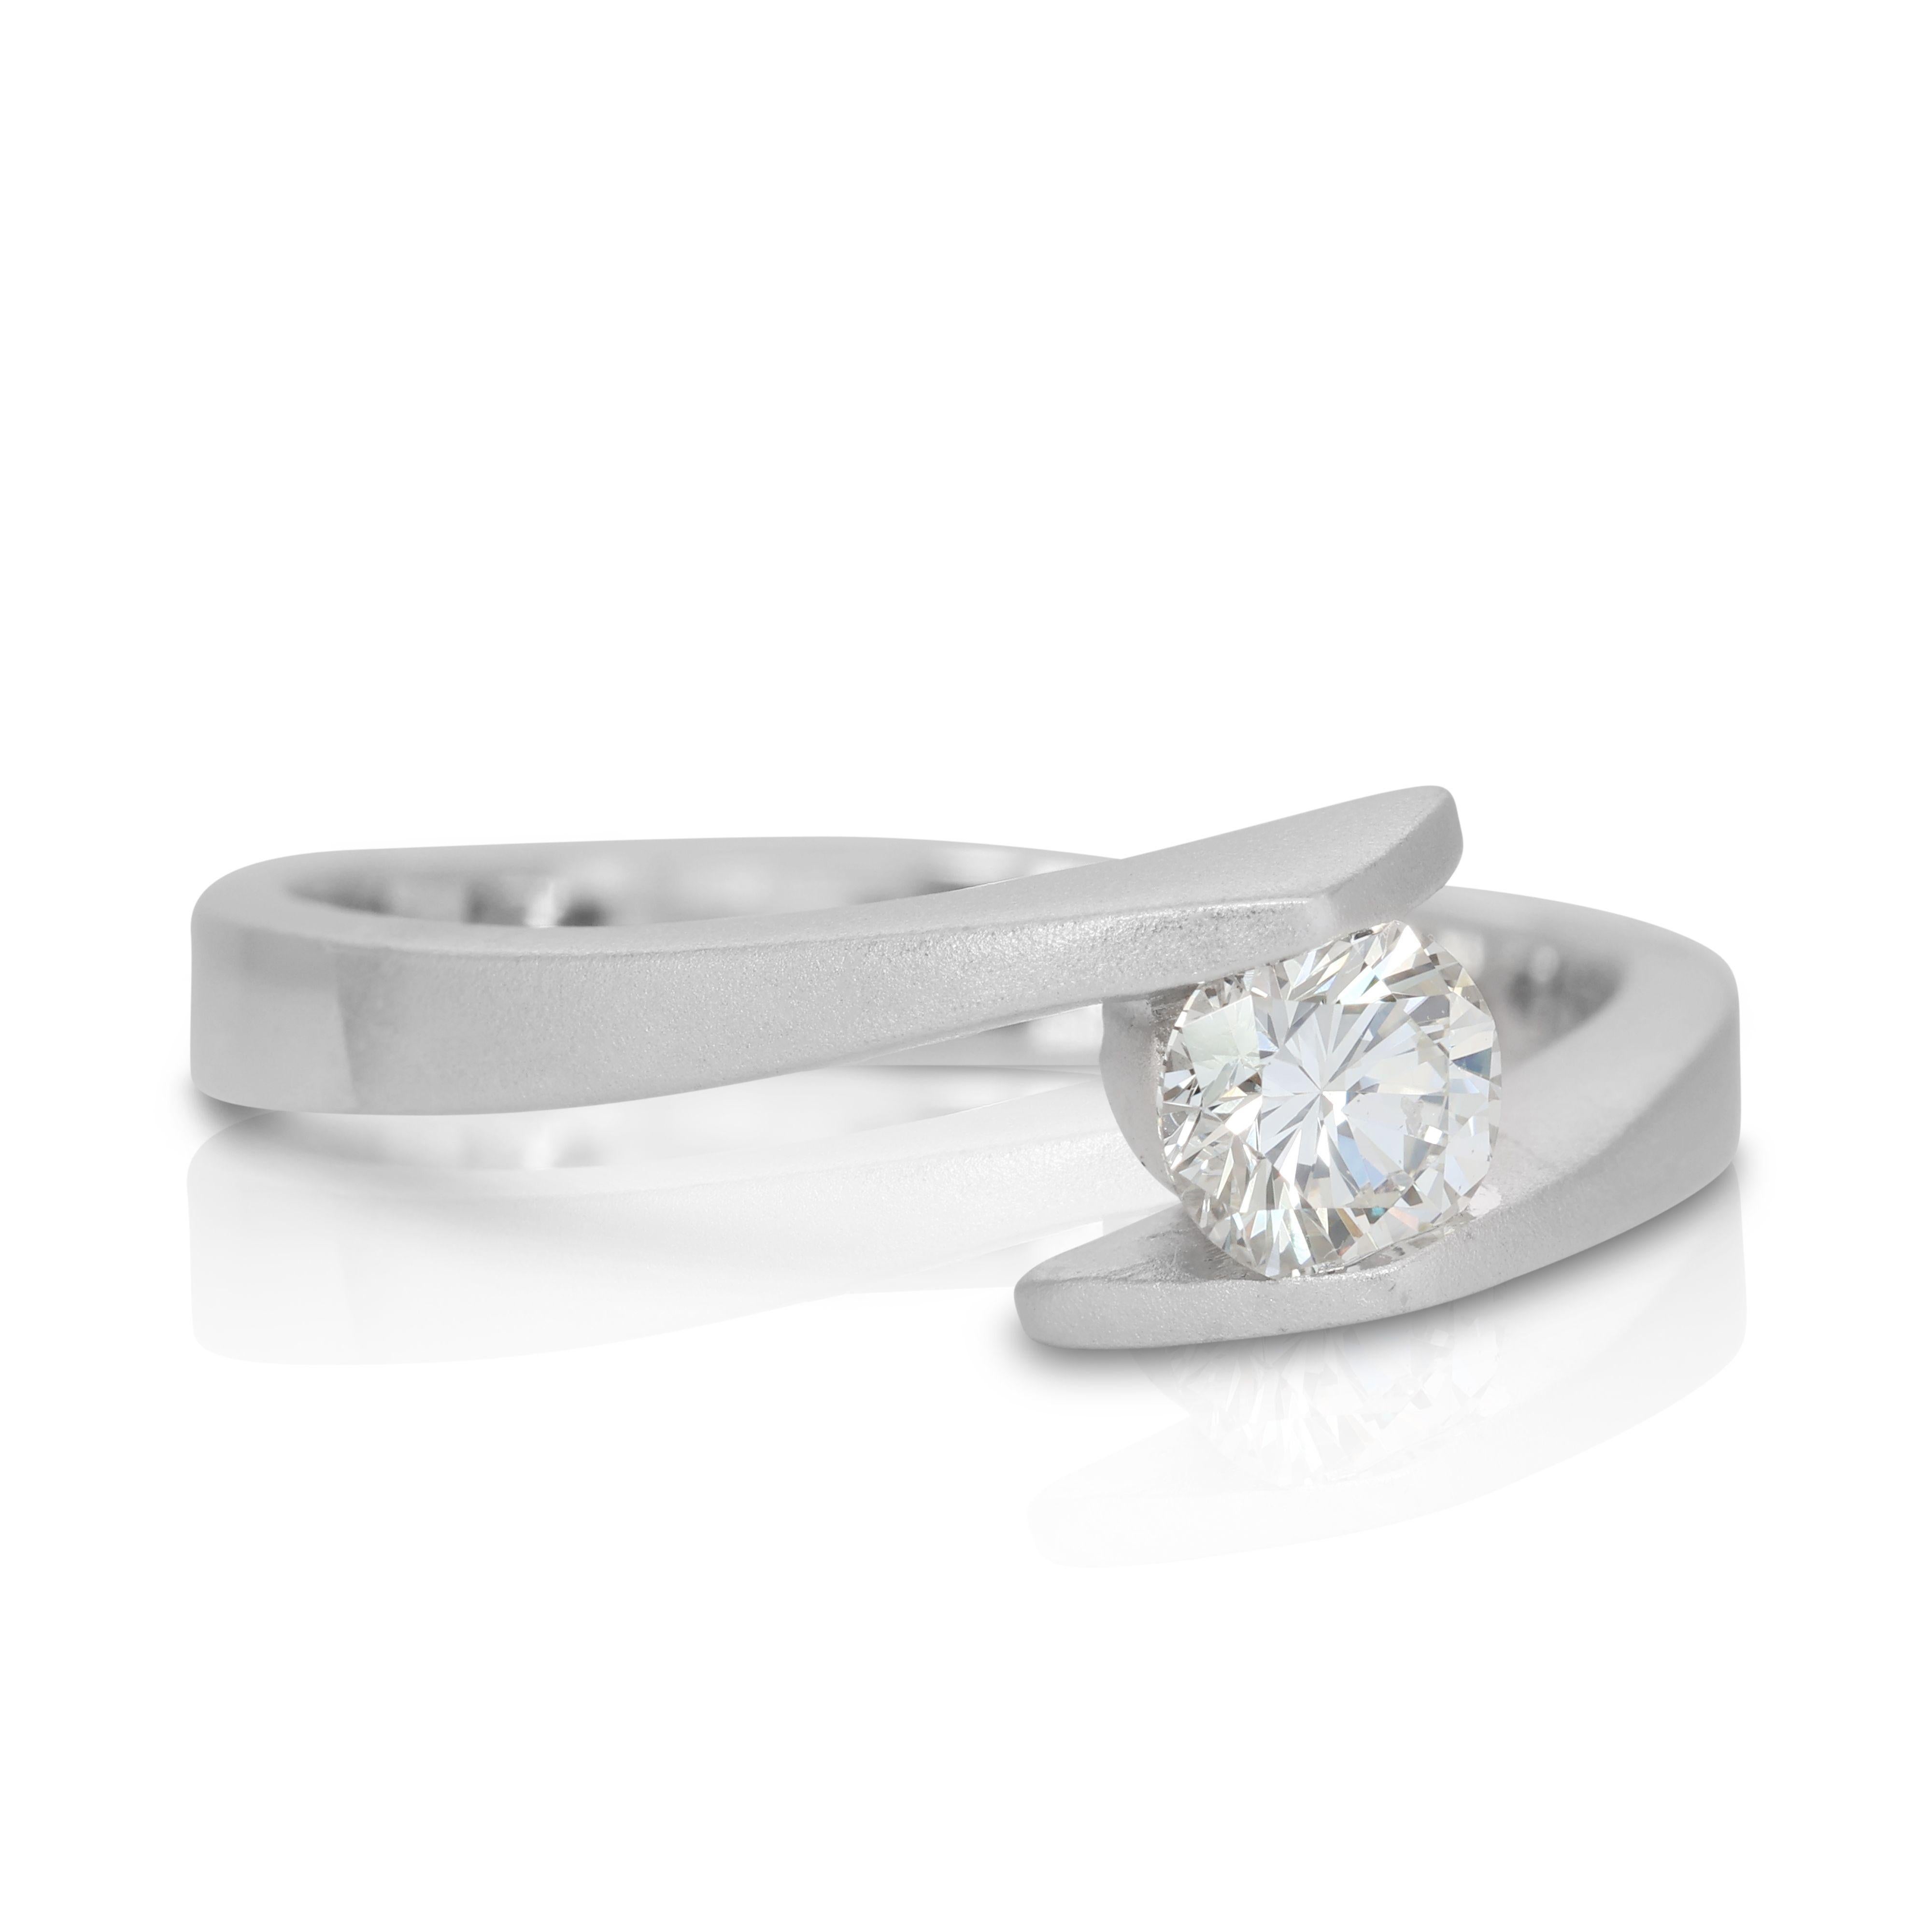 Brilliant Cut Elegant 18K White Gold Diamond Ring with 0.40 ct Natural Diamonds For Sale